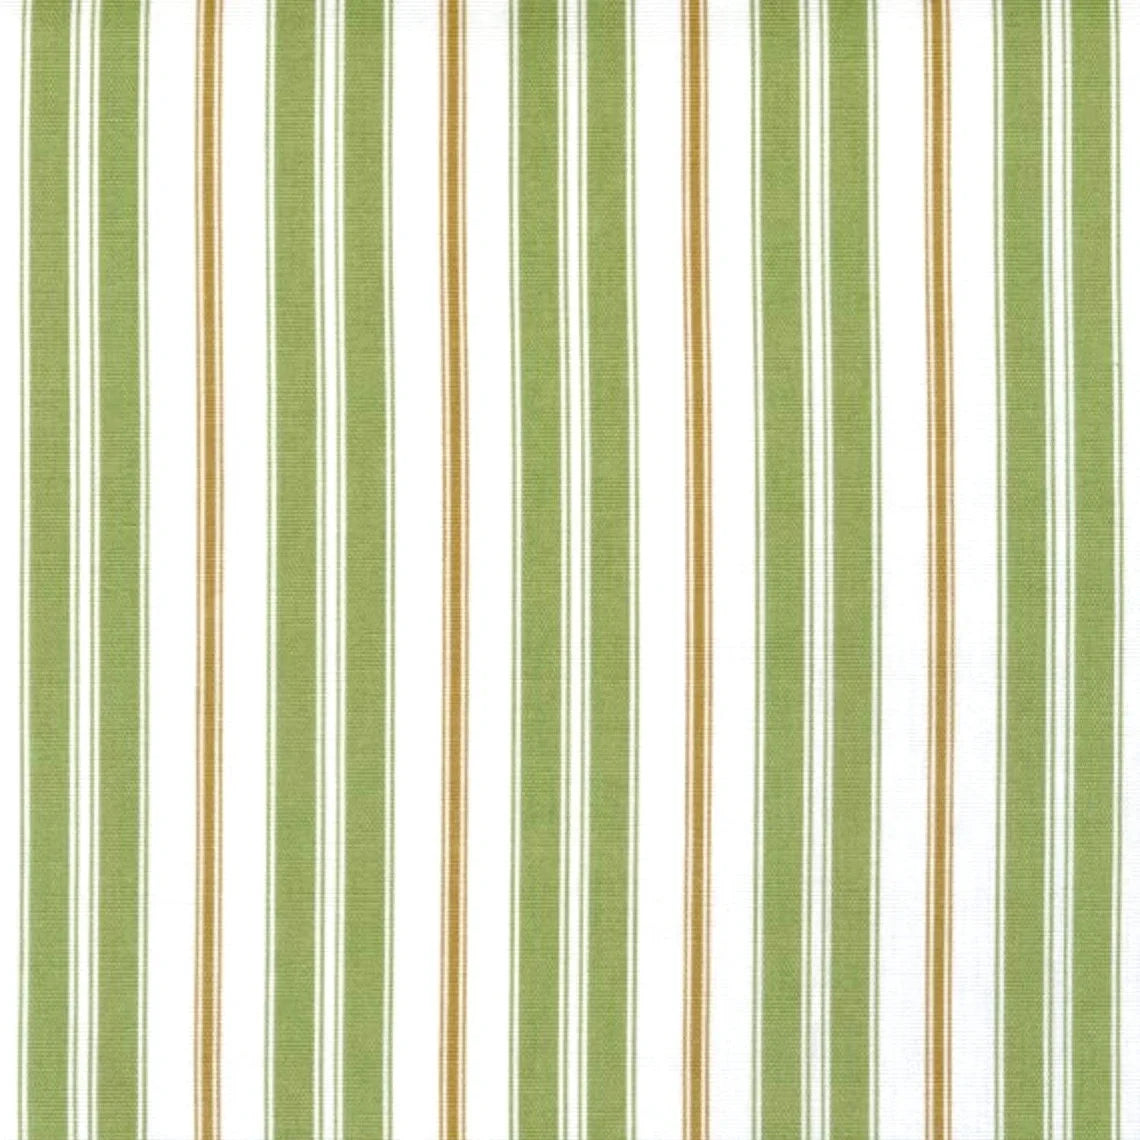 scalloped valance in newbury aloe green stripe- green, brown, white